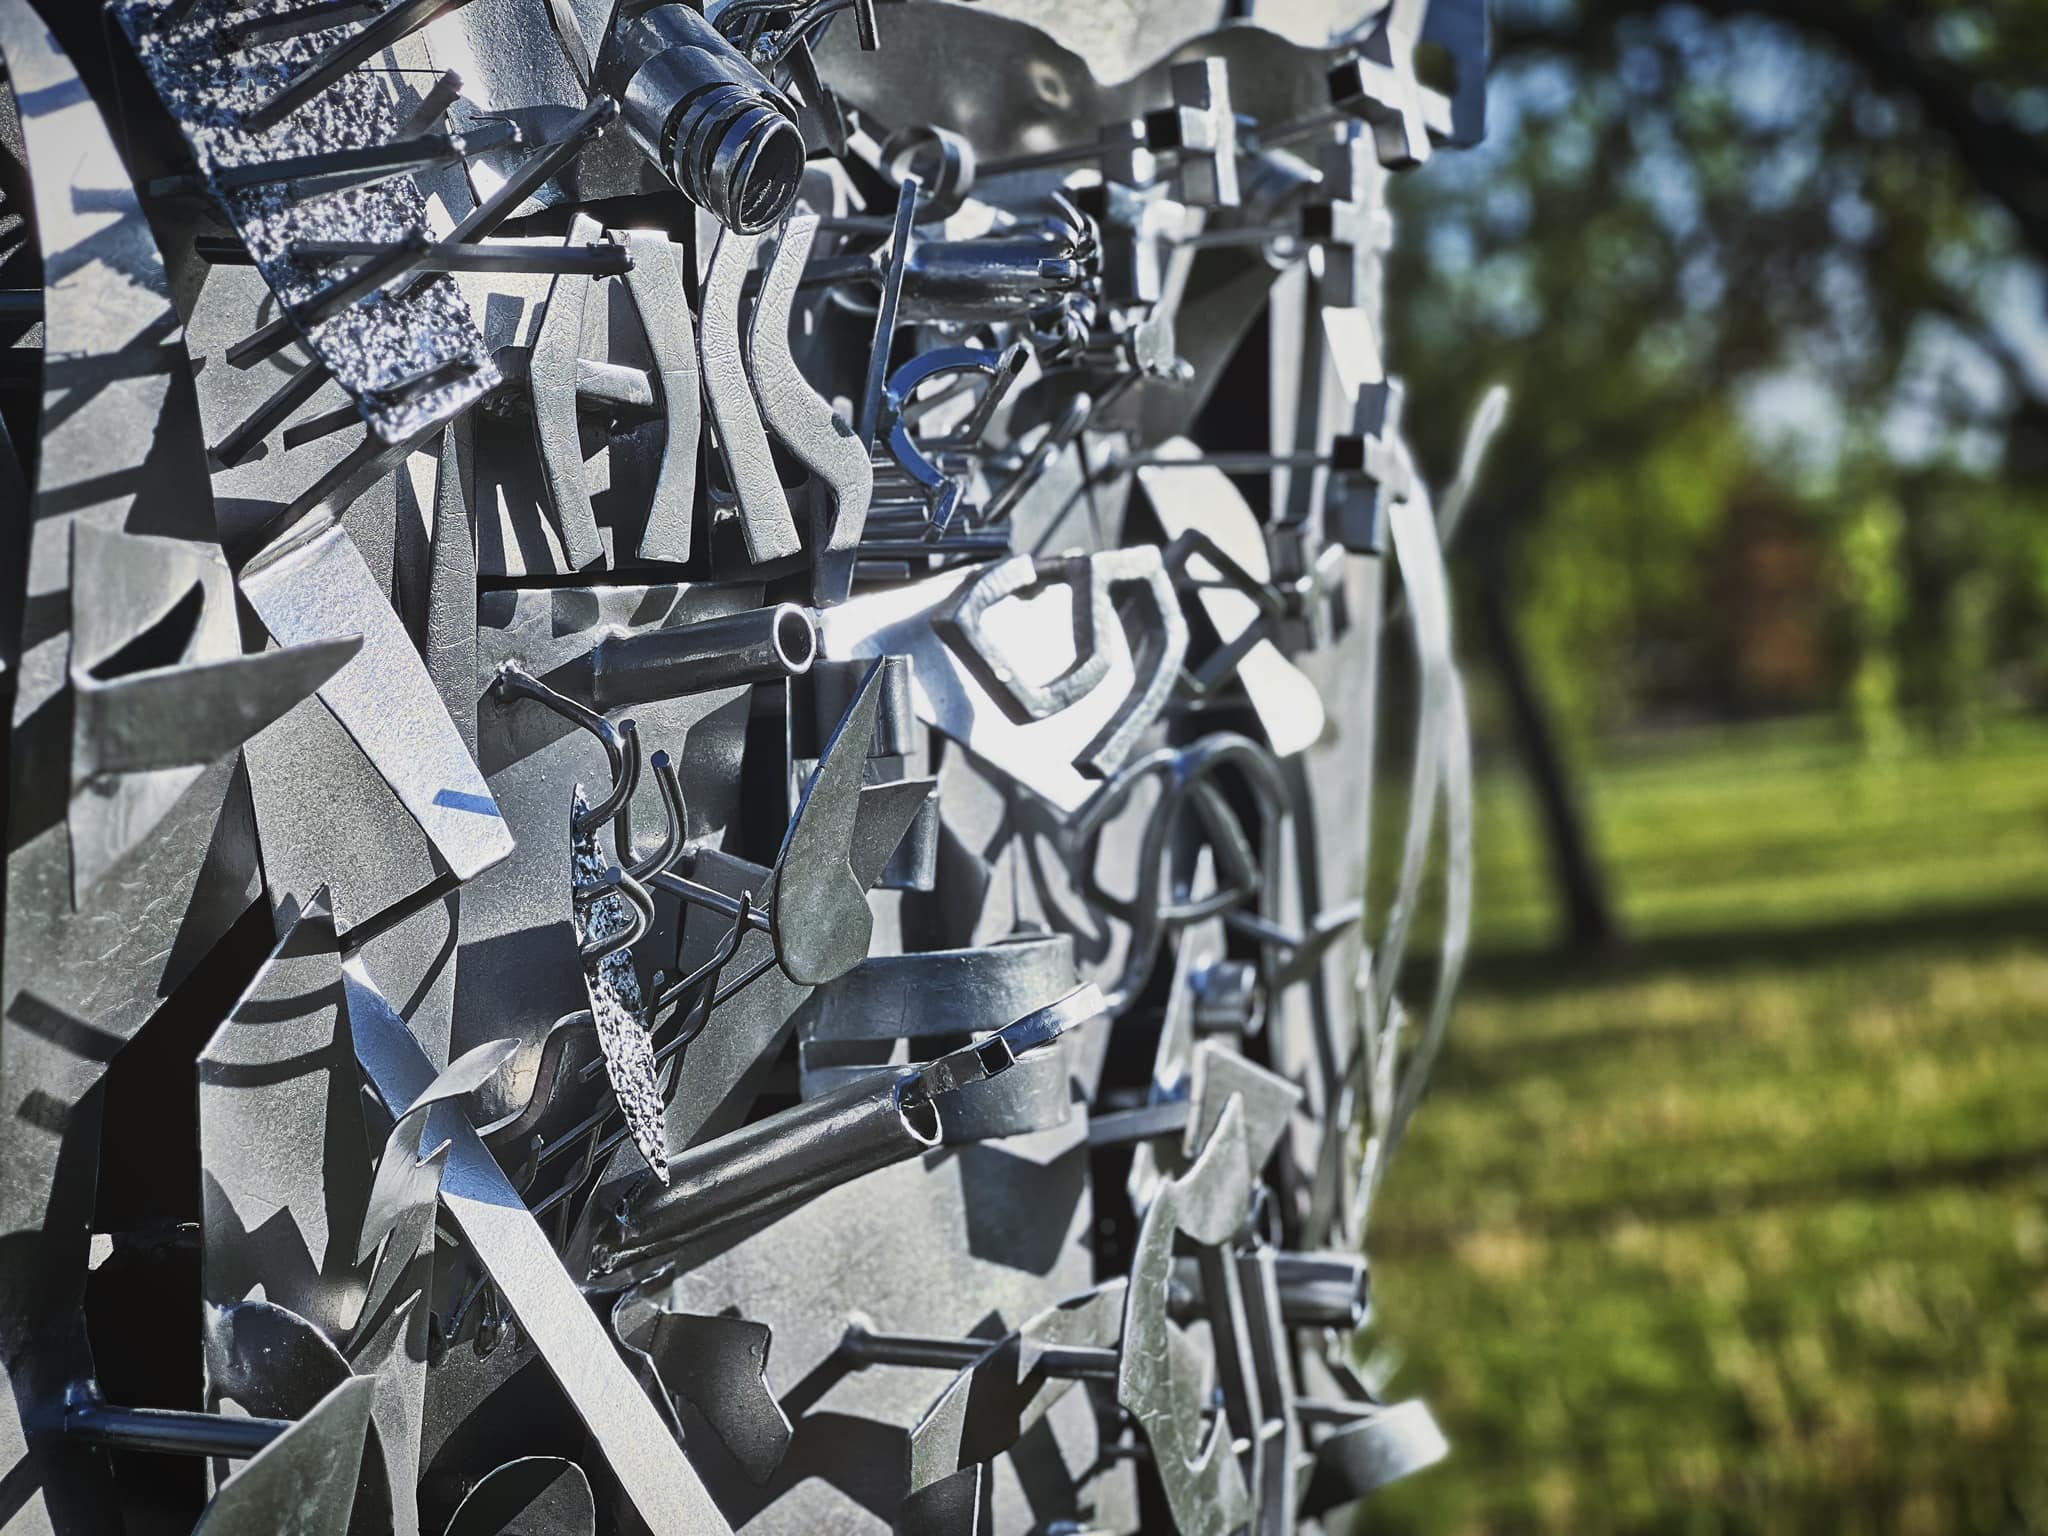 a close up of a metal sculpture in a park.